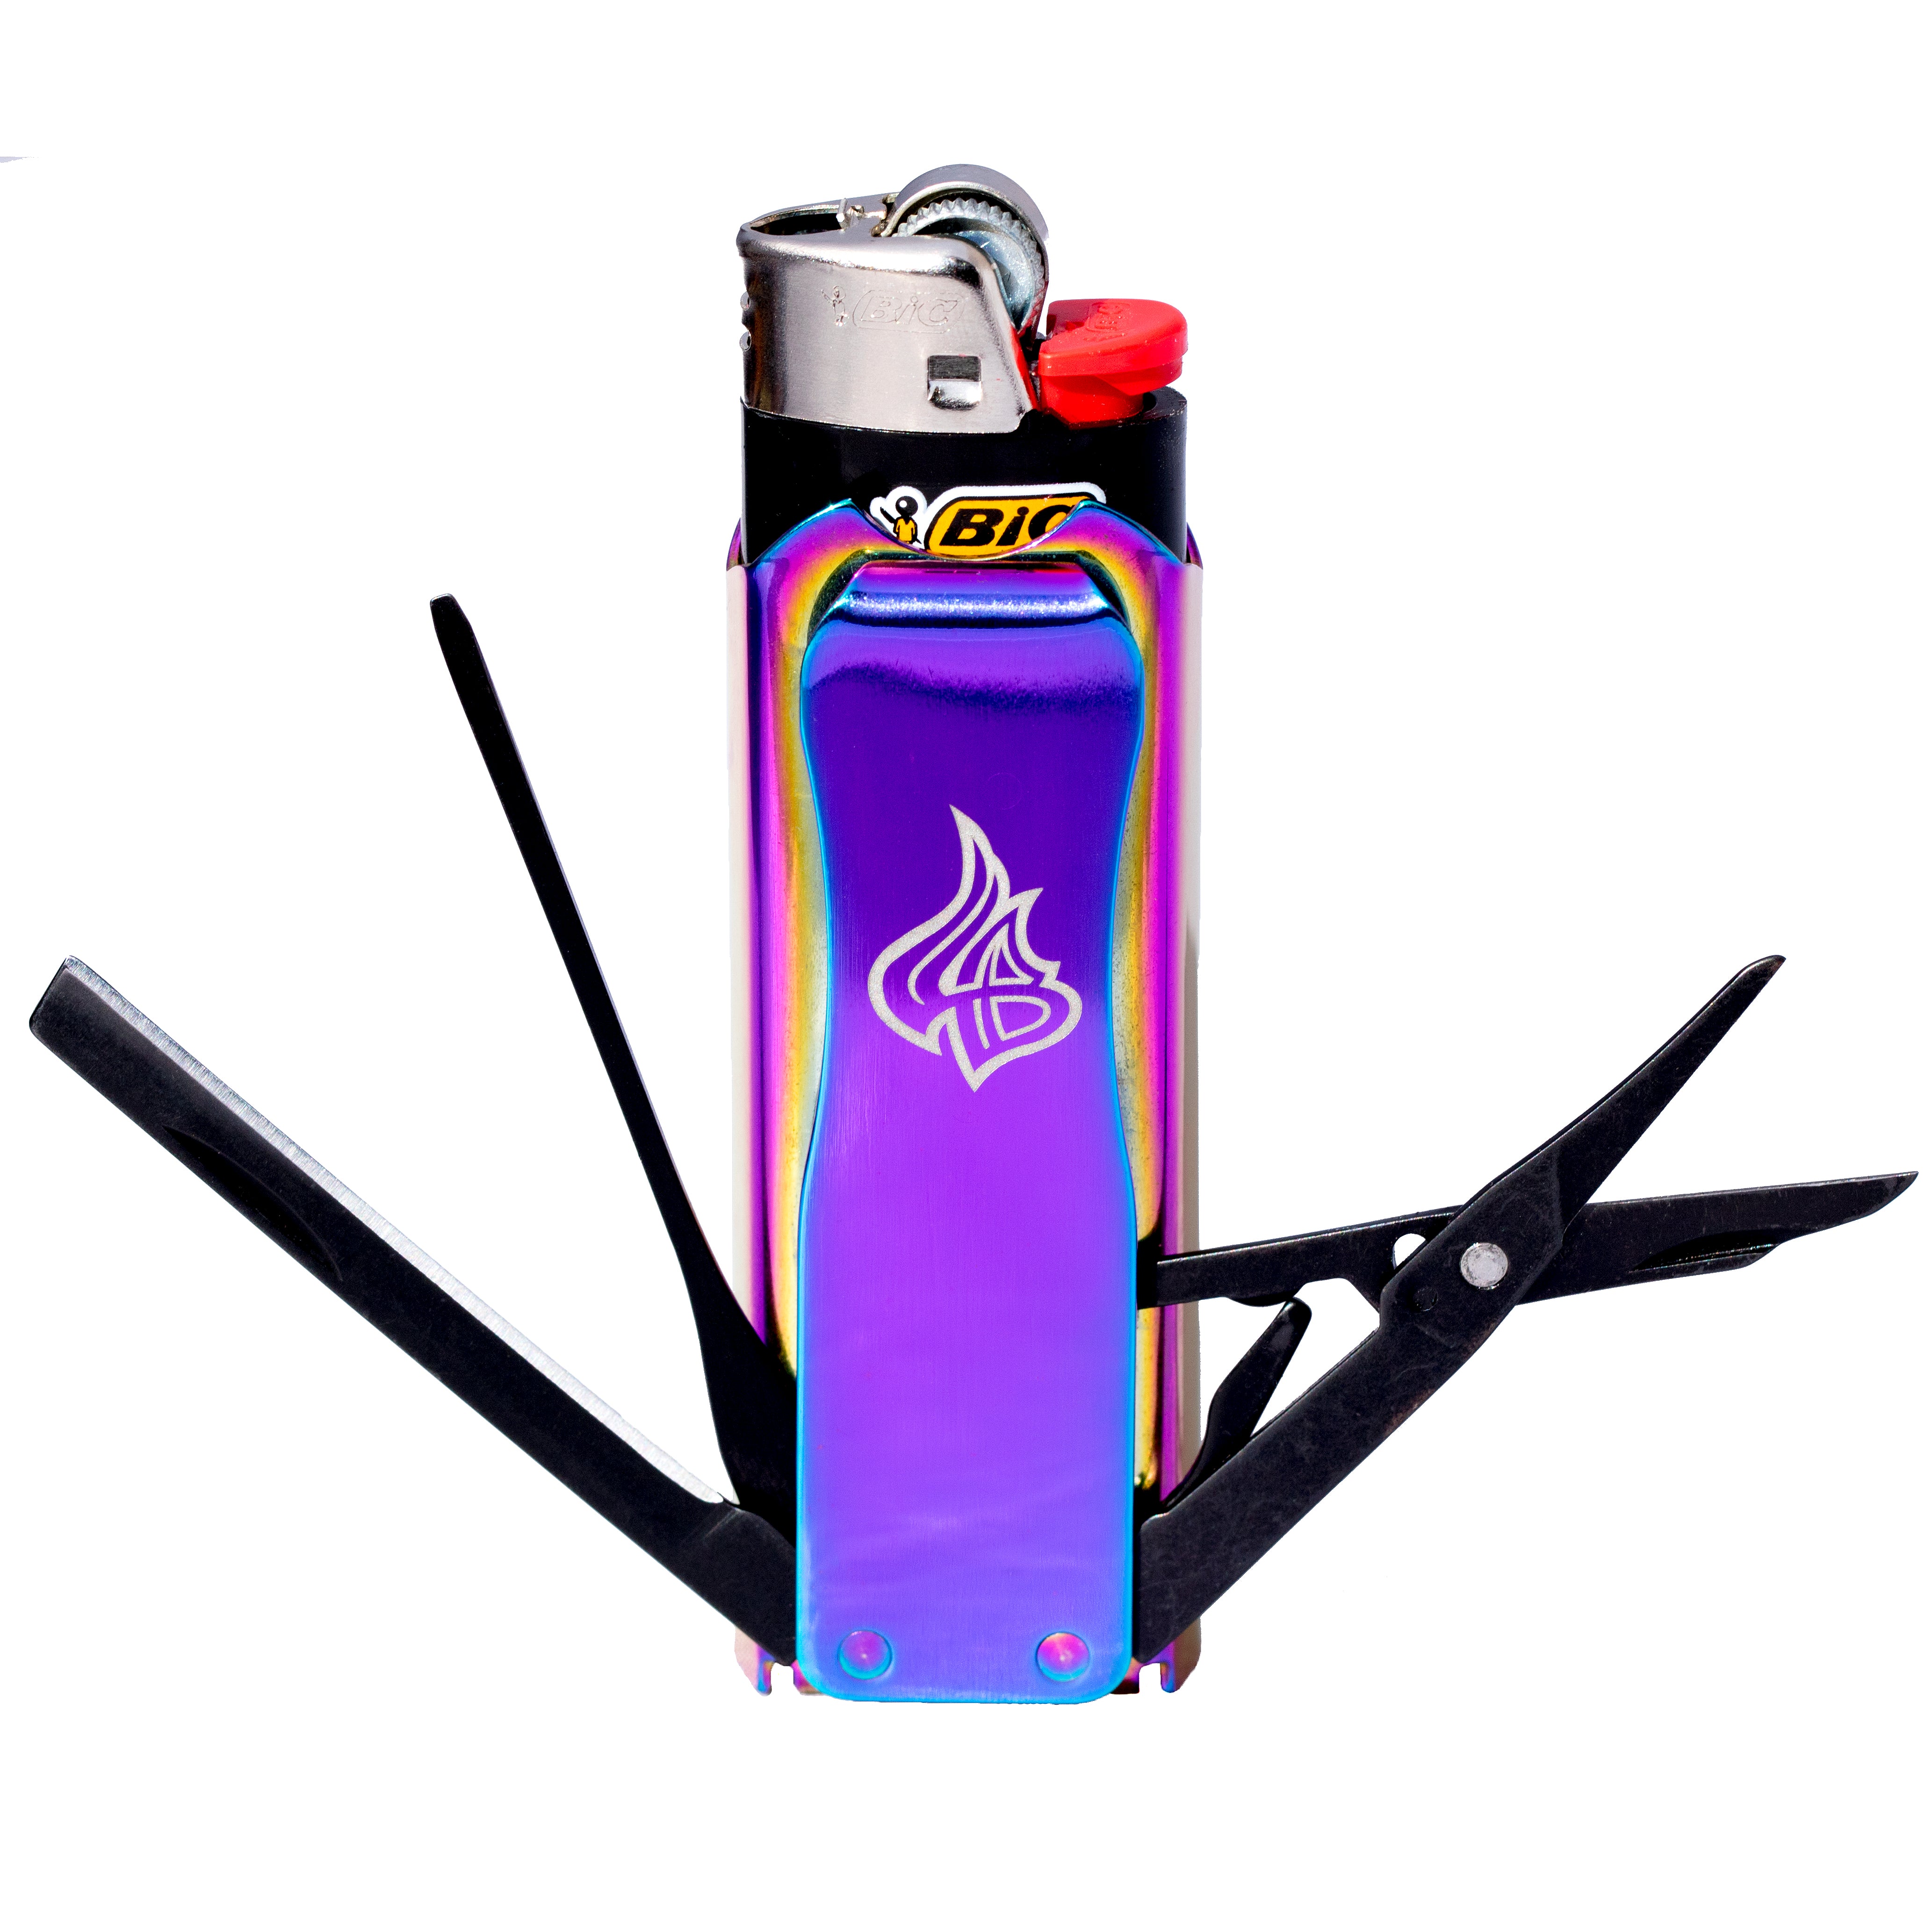 BIC Multi-Purpose Rose Gold Edition Lighter, 1-Pack